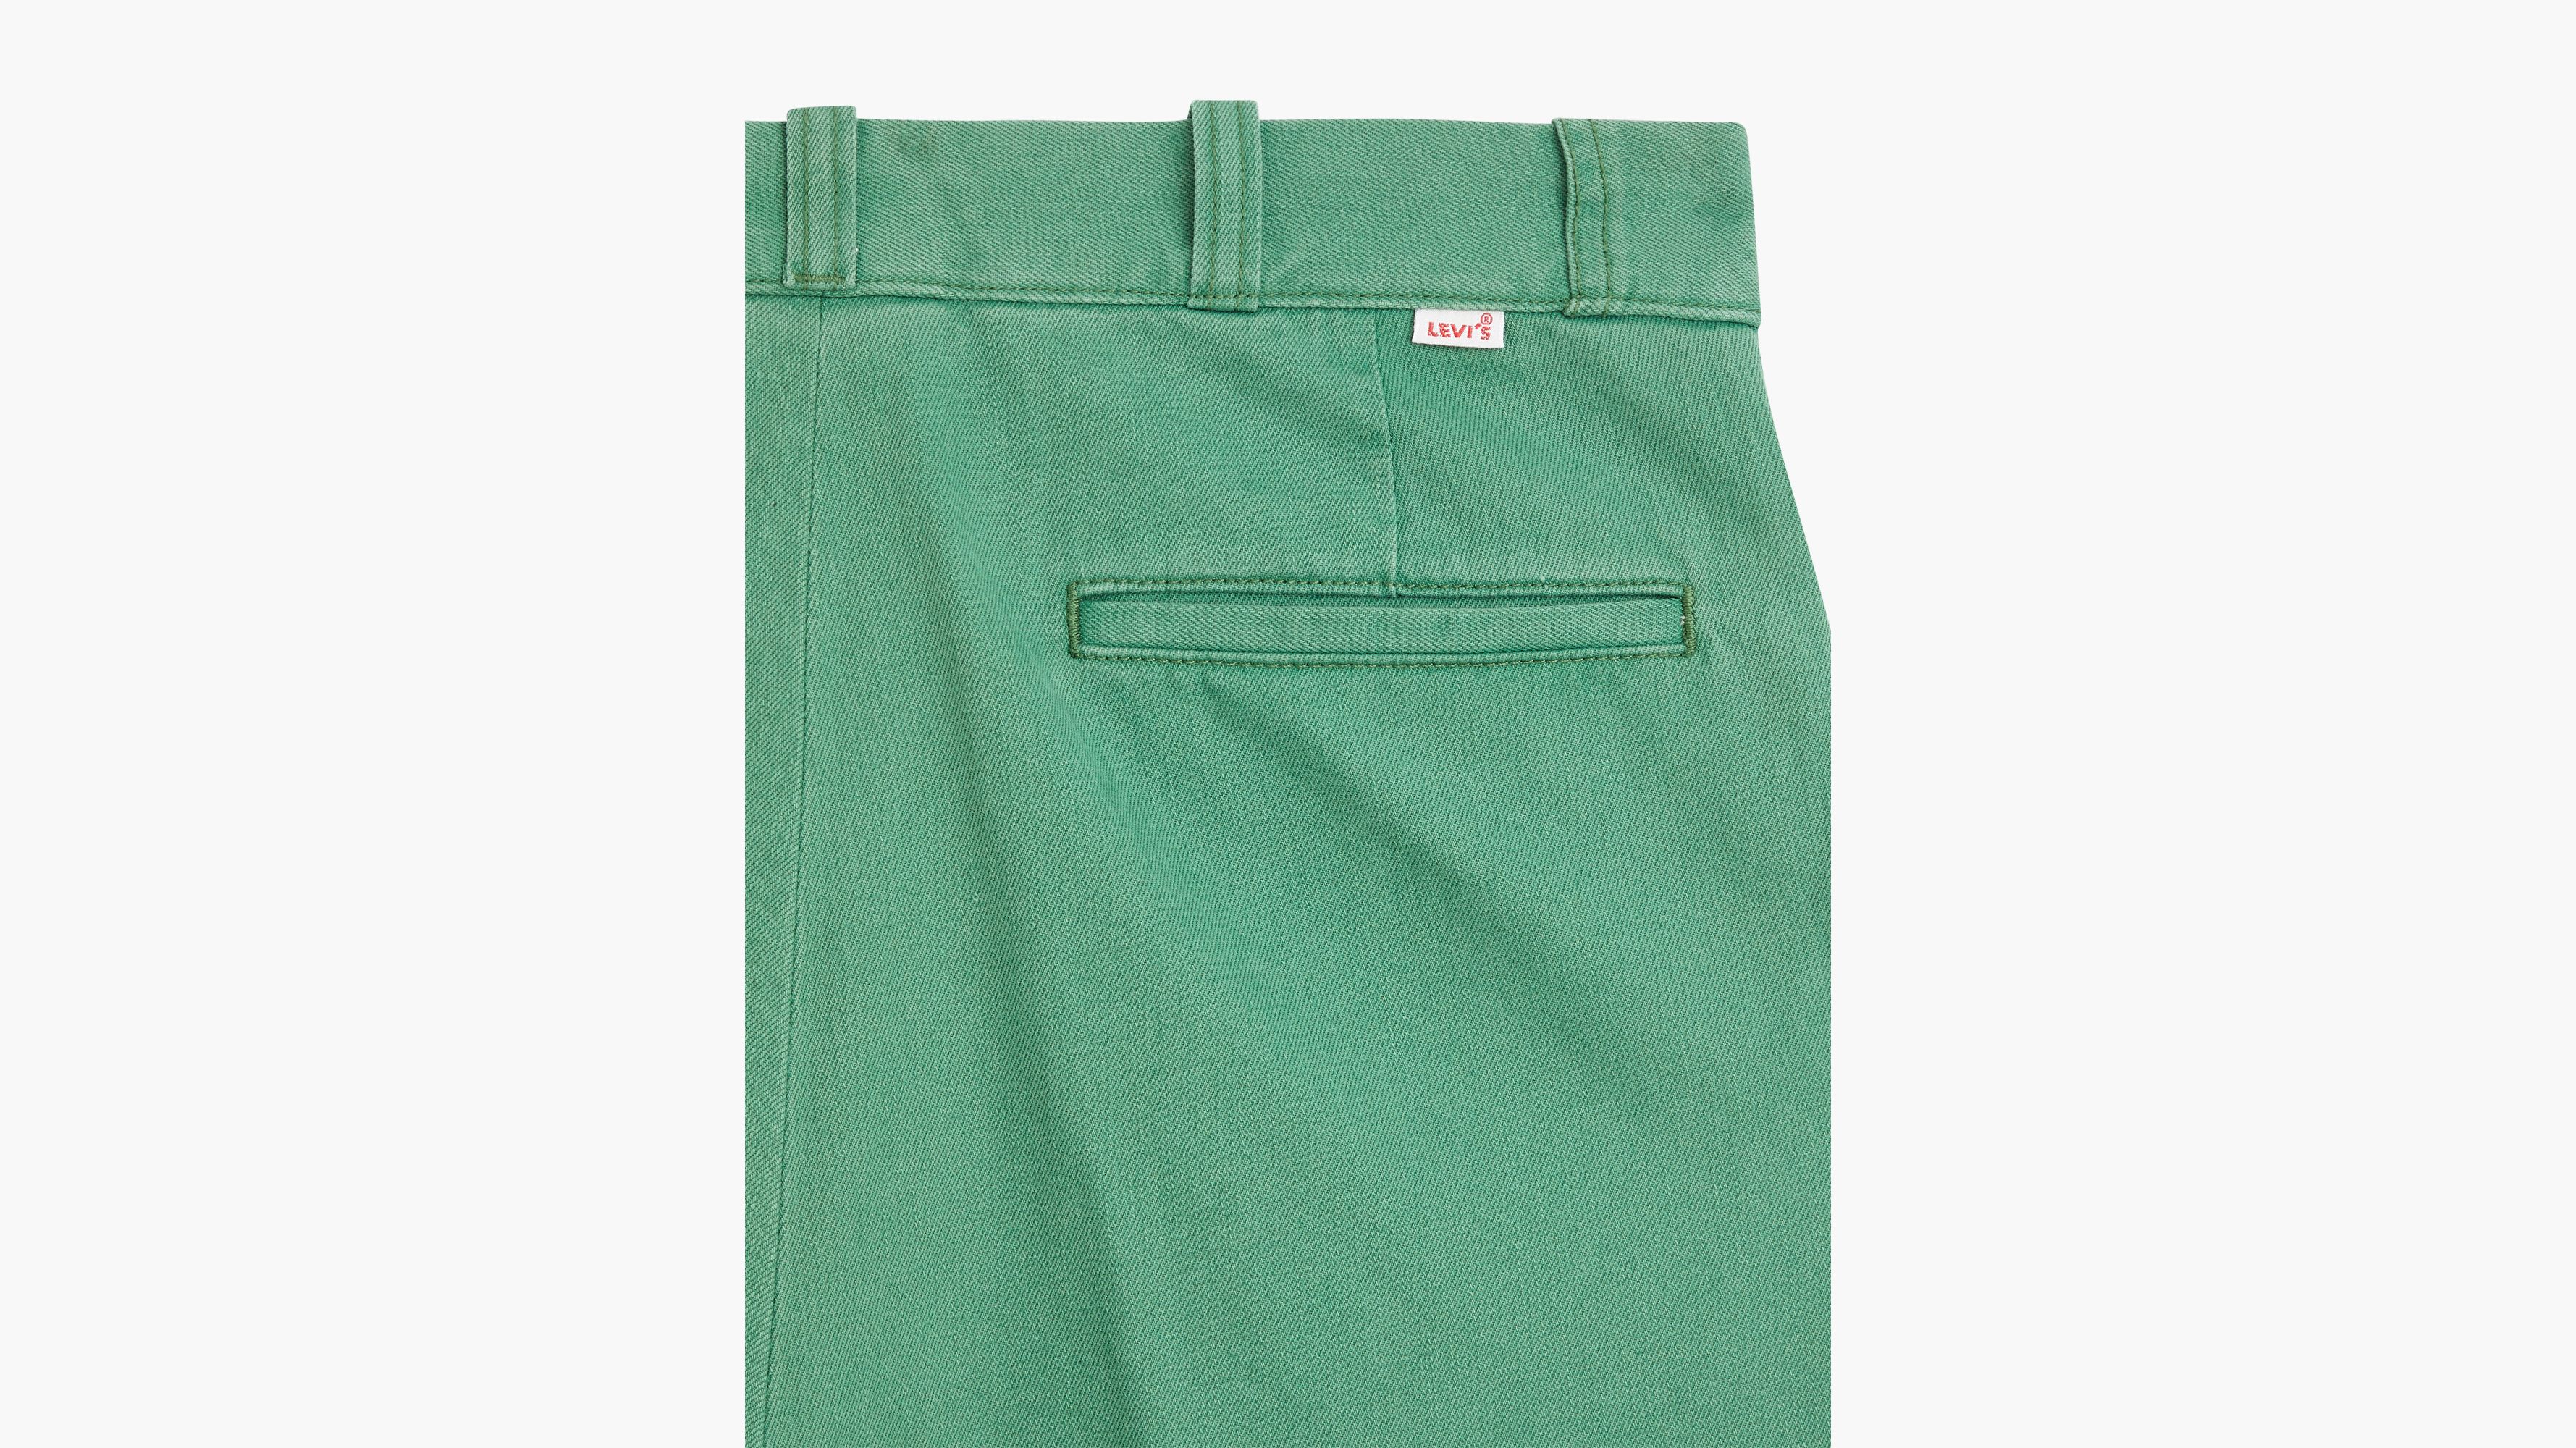 LEVI'S VINTAGE CLOTHING 1950's Tab Twills Shirt (Green Fade